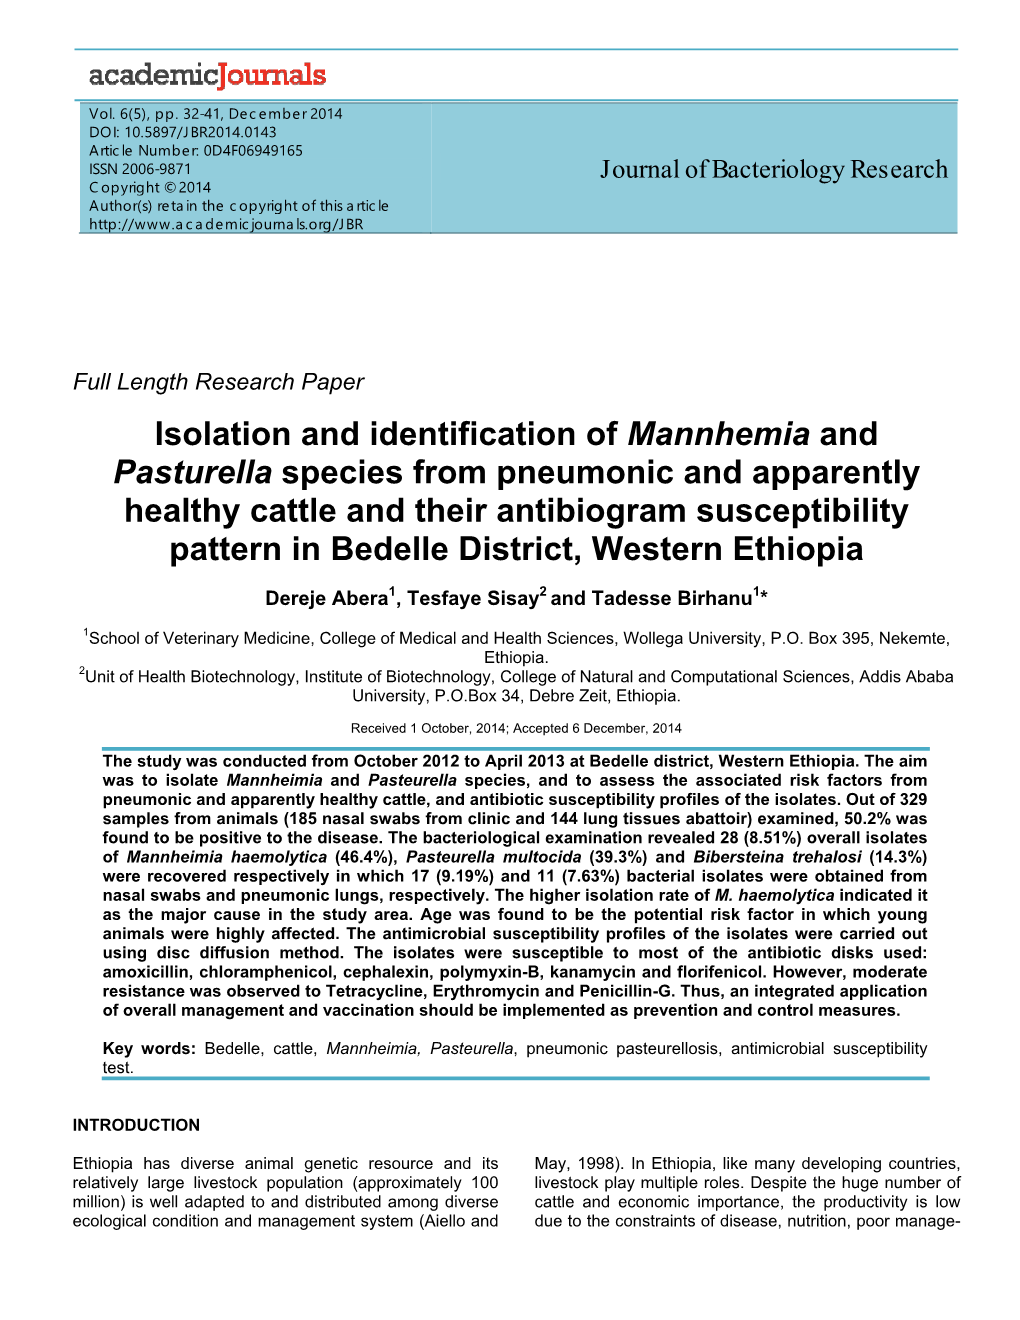 Isolation and Identification of Mannhemia and Pasturella Species